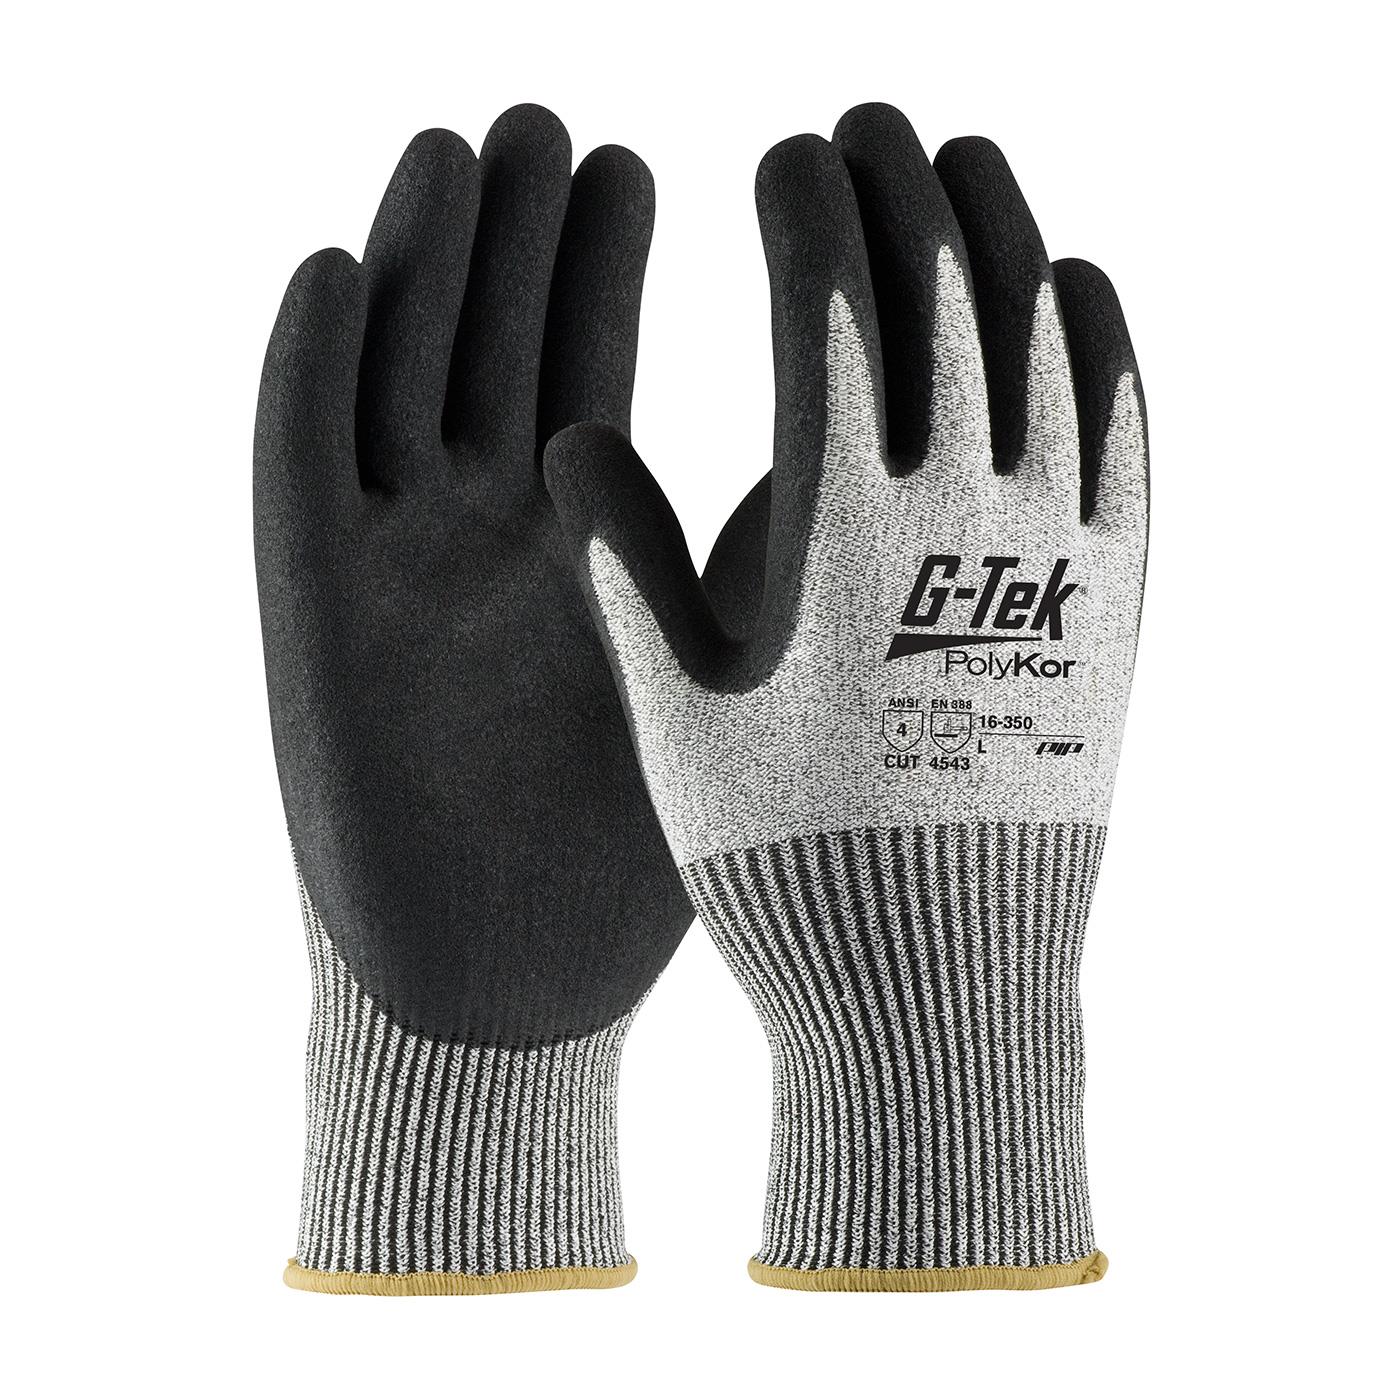 G-TEK POLYKOR MICROSURFACE NITRILE PALM - Cut Resistant Gloves